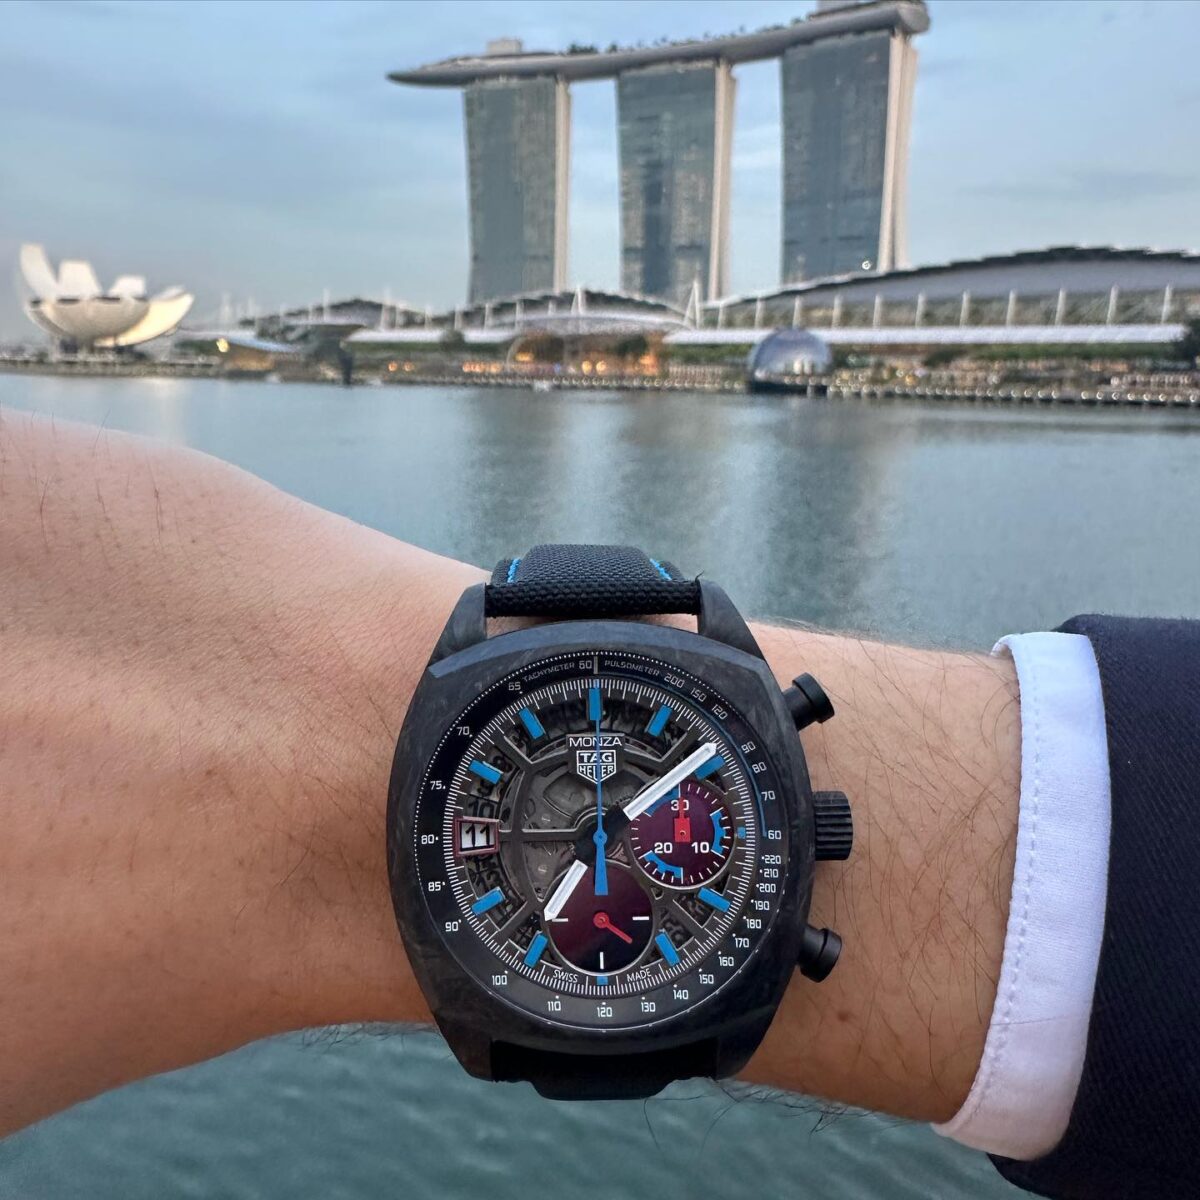 A watch on a man's wrist.